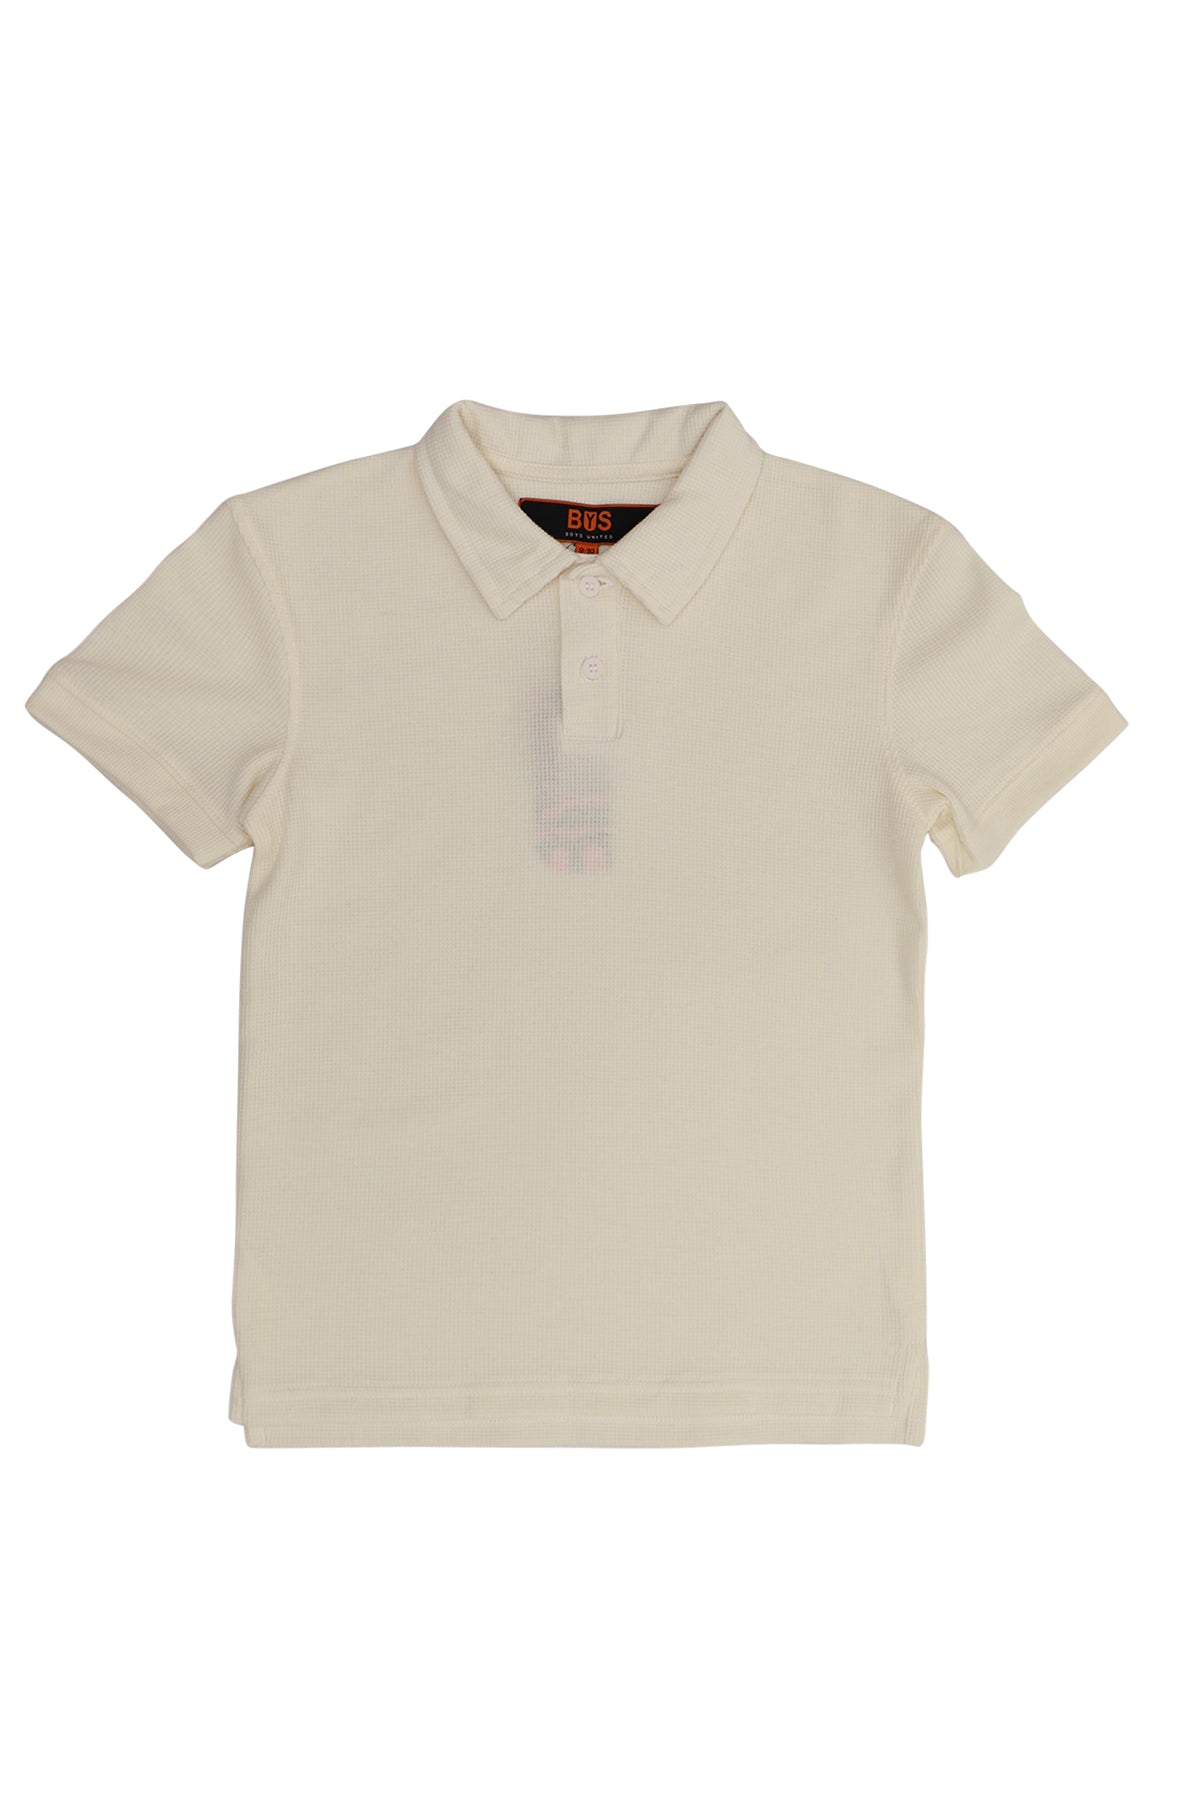 BYS Kids Boys Short Sleeve Casual Polo T-Shirt